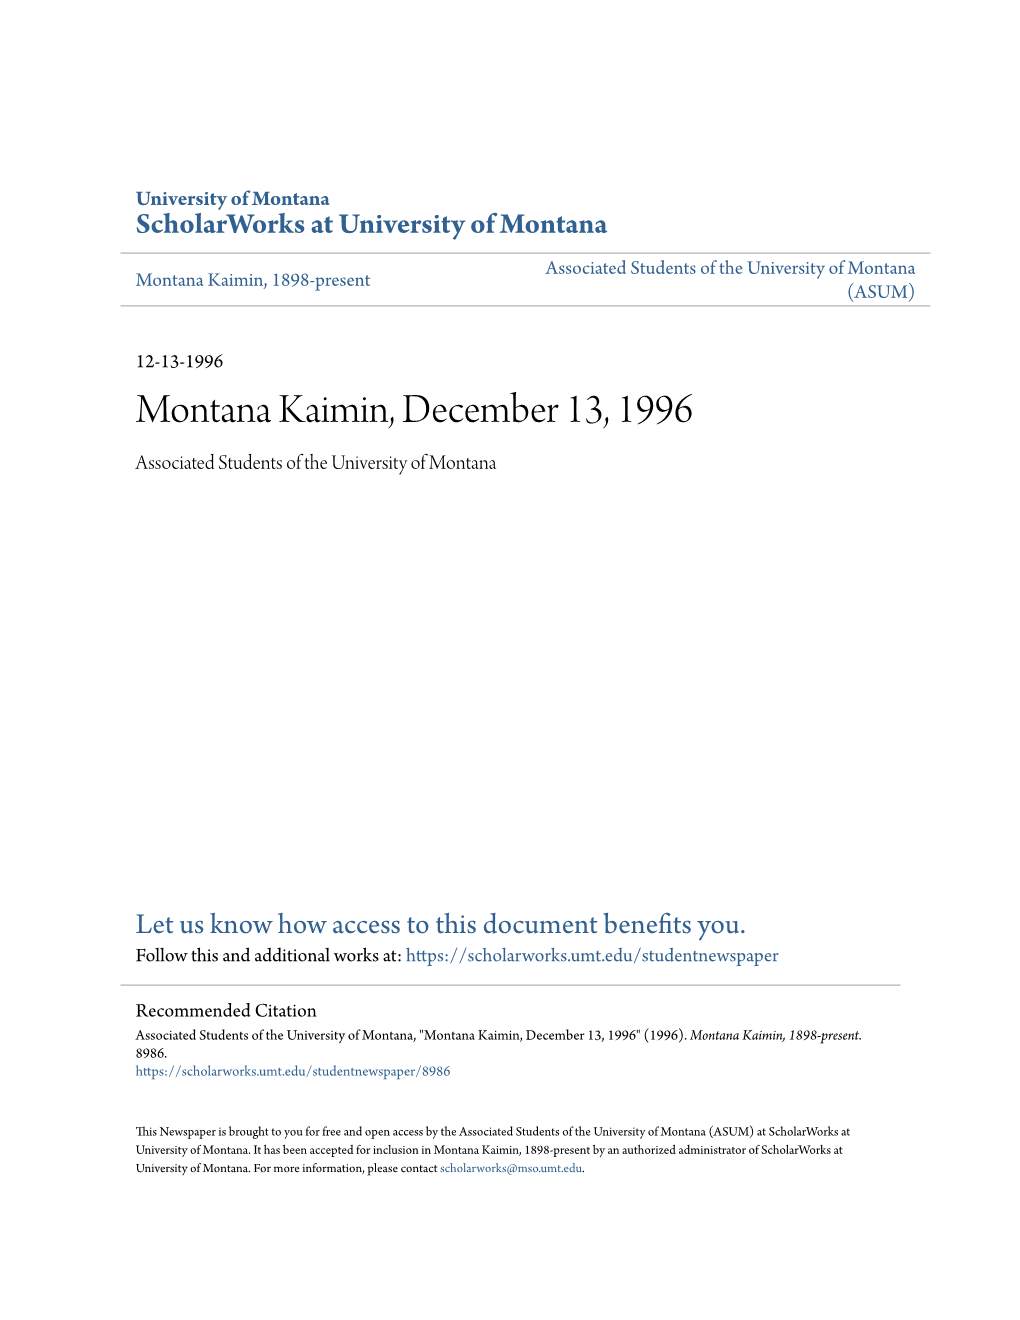 Montana Kaimin, December 13, 1996 Associated Students of the University of Montana